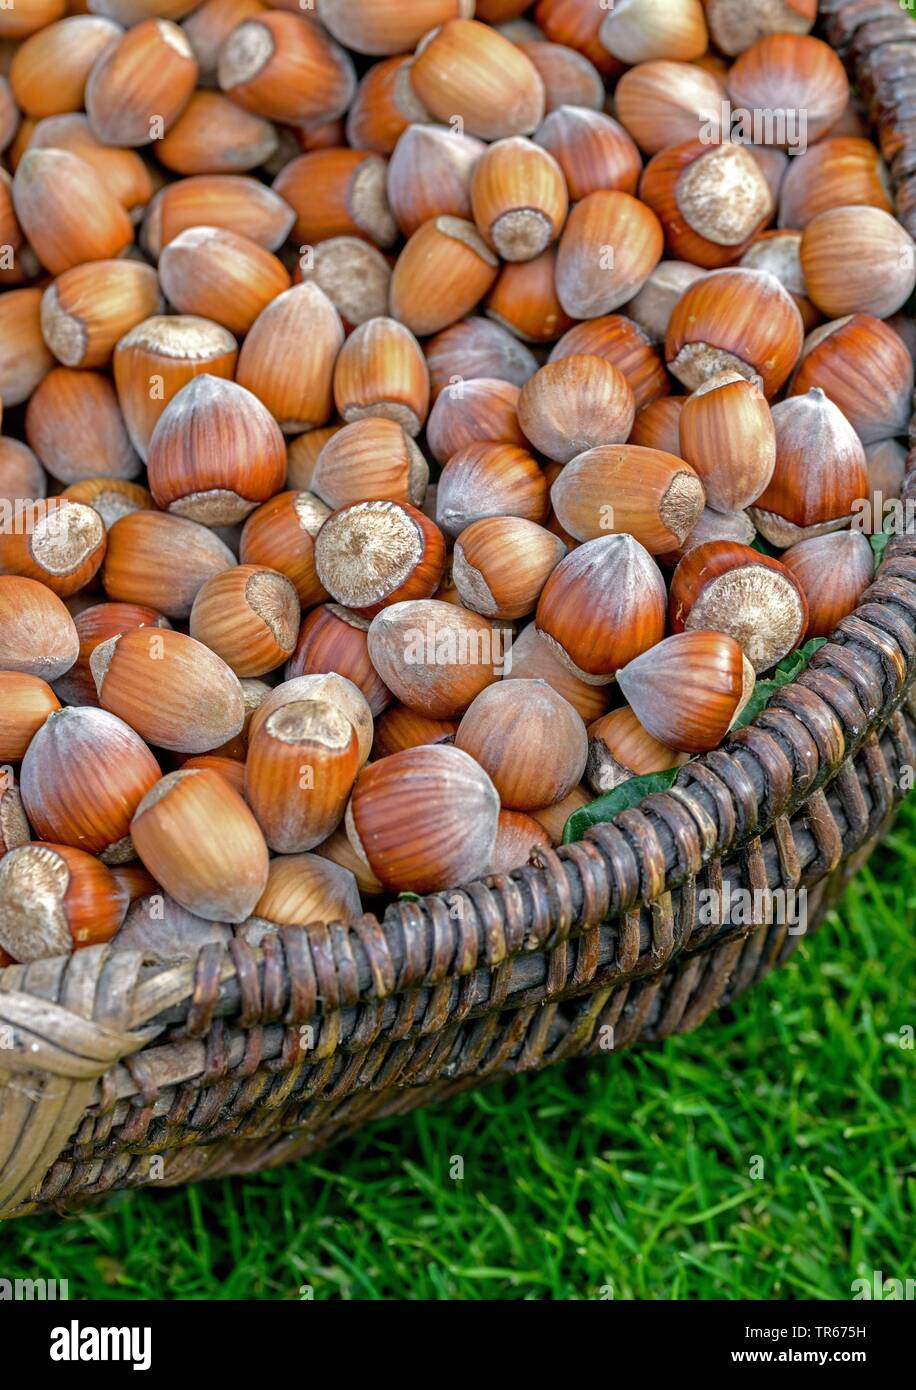 hazelnut (Corylus avellana), hazelnuts in a basket, Germany Stock Photo